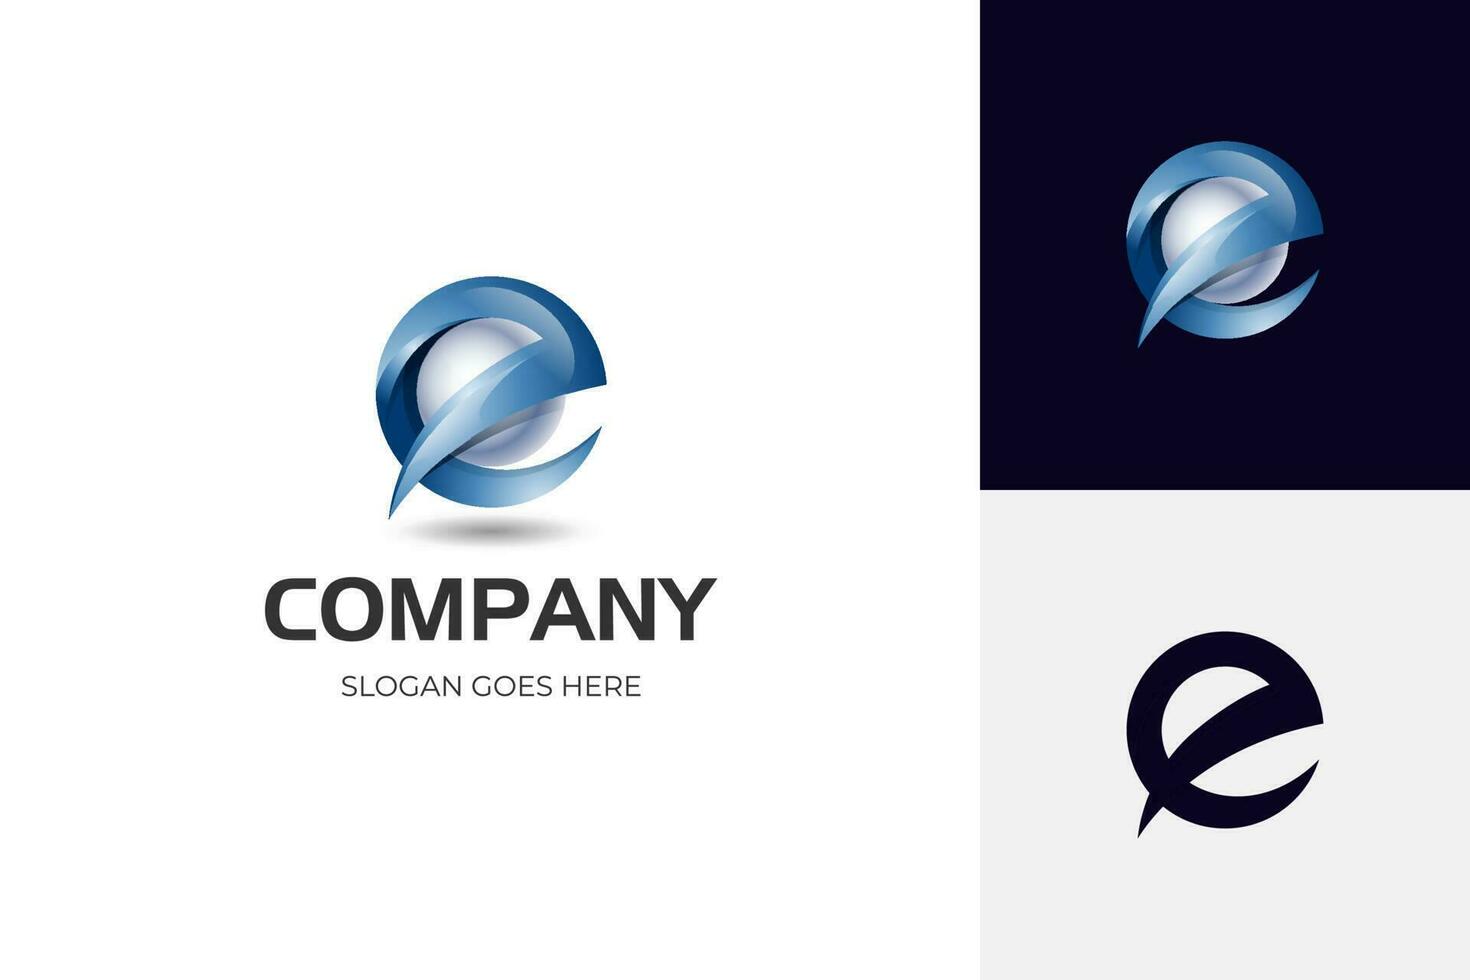 modern letter E abstract logo template with sphere globe combined letter e logo for technology brand identity symbol mark design vector